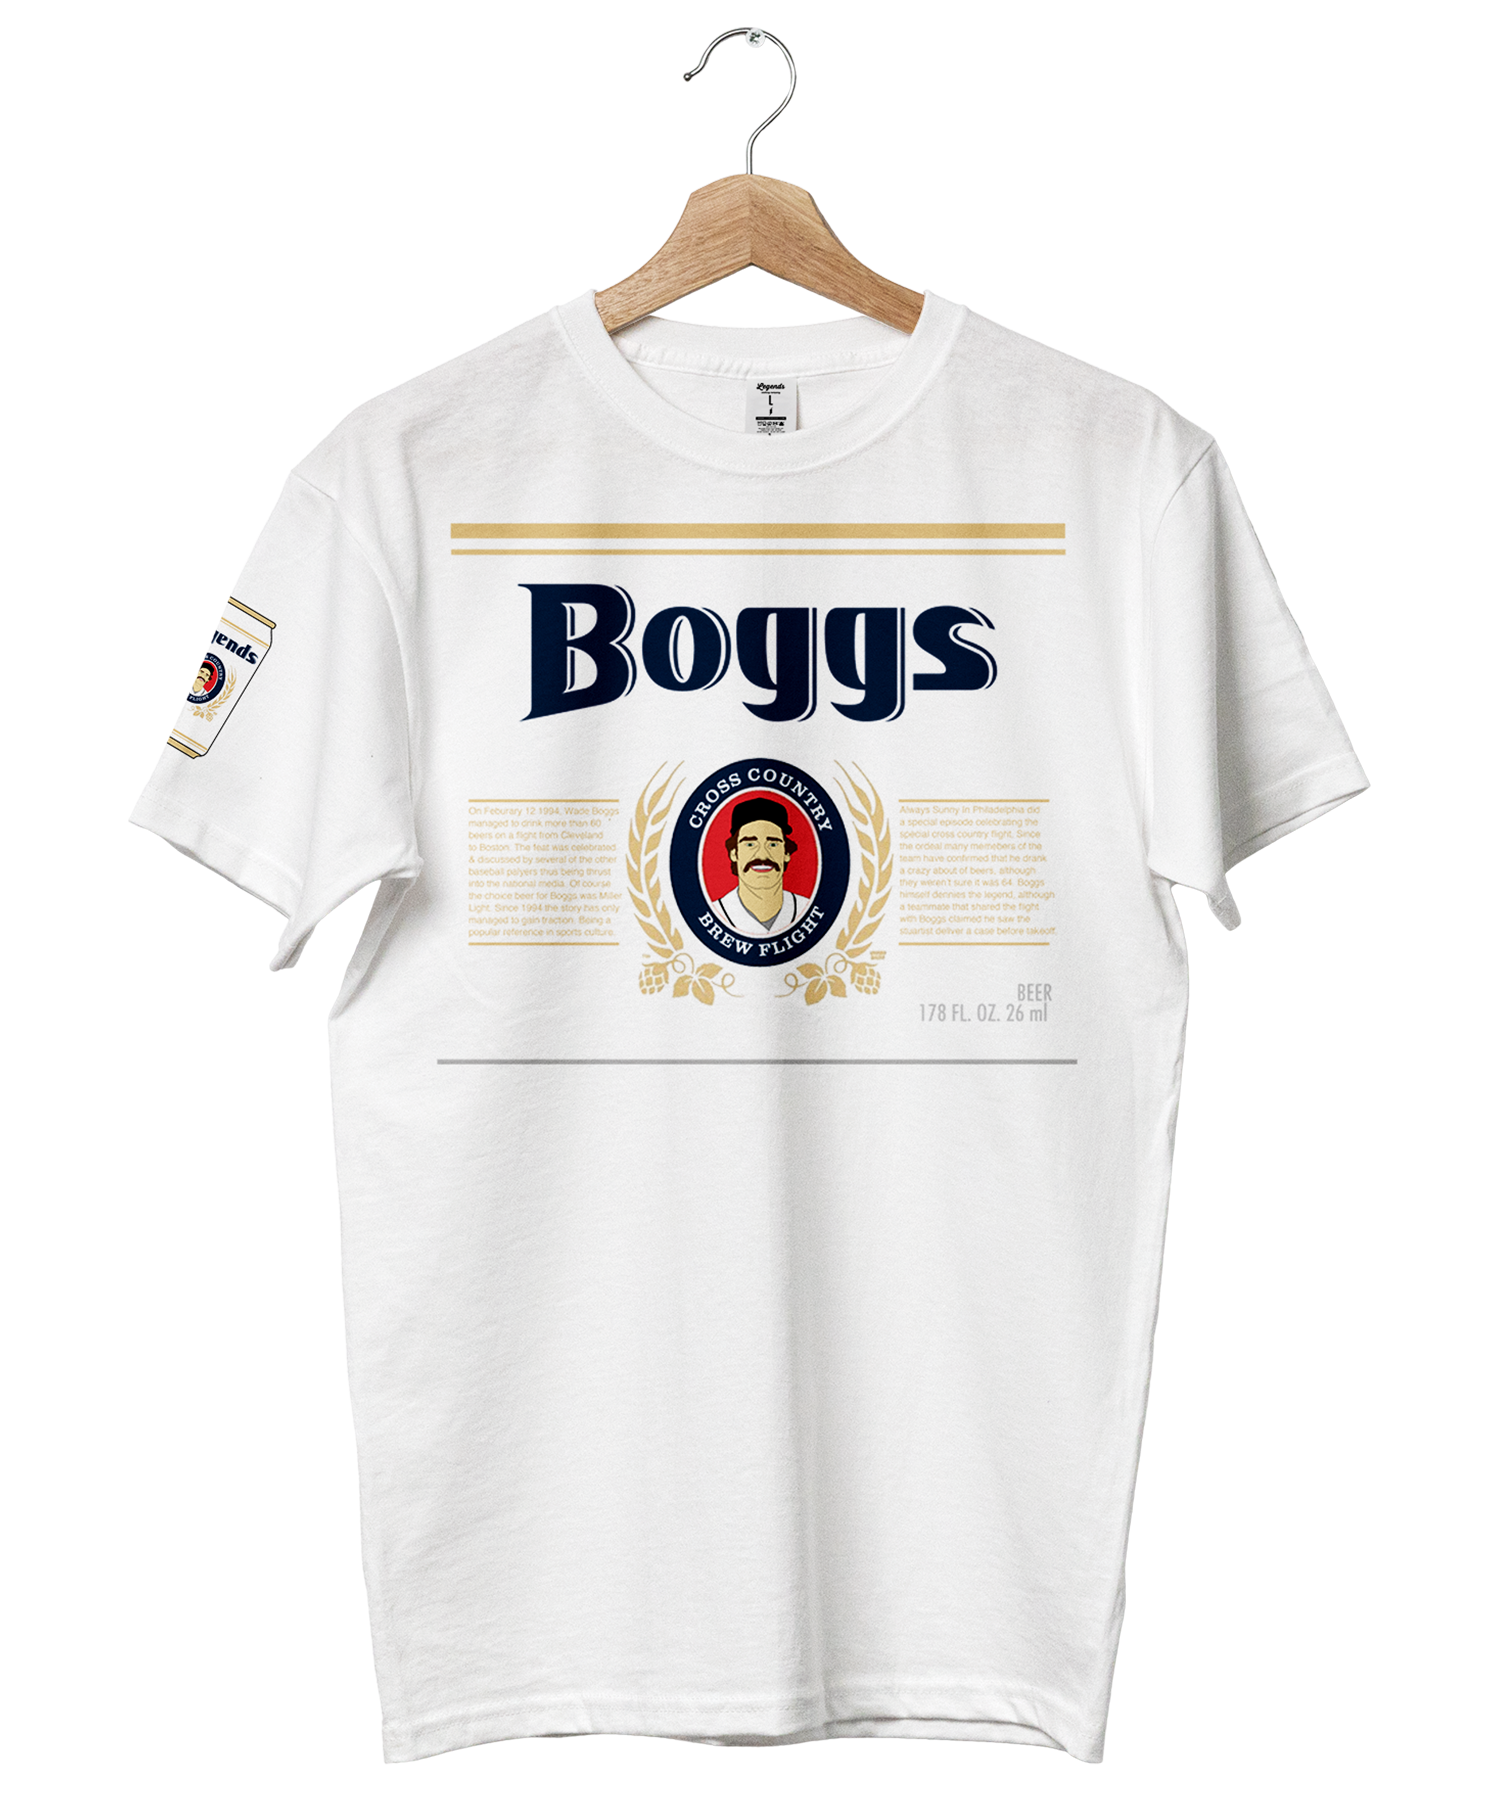 Boggs Beer T-Shirt